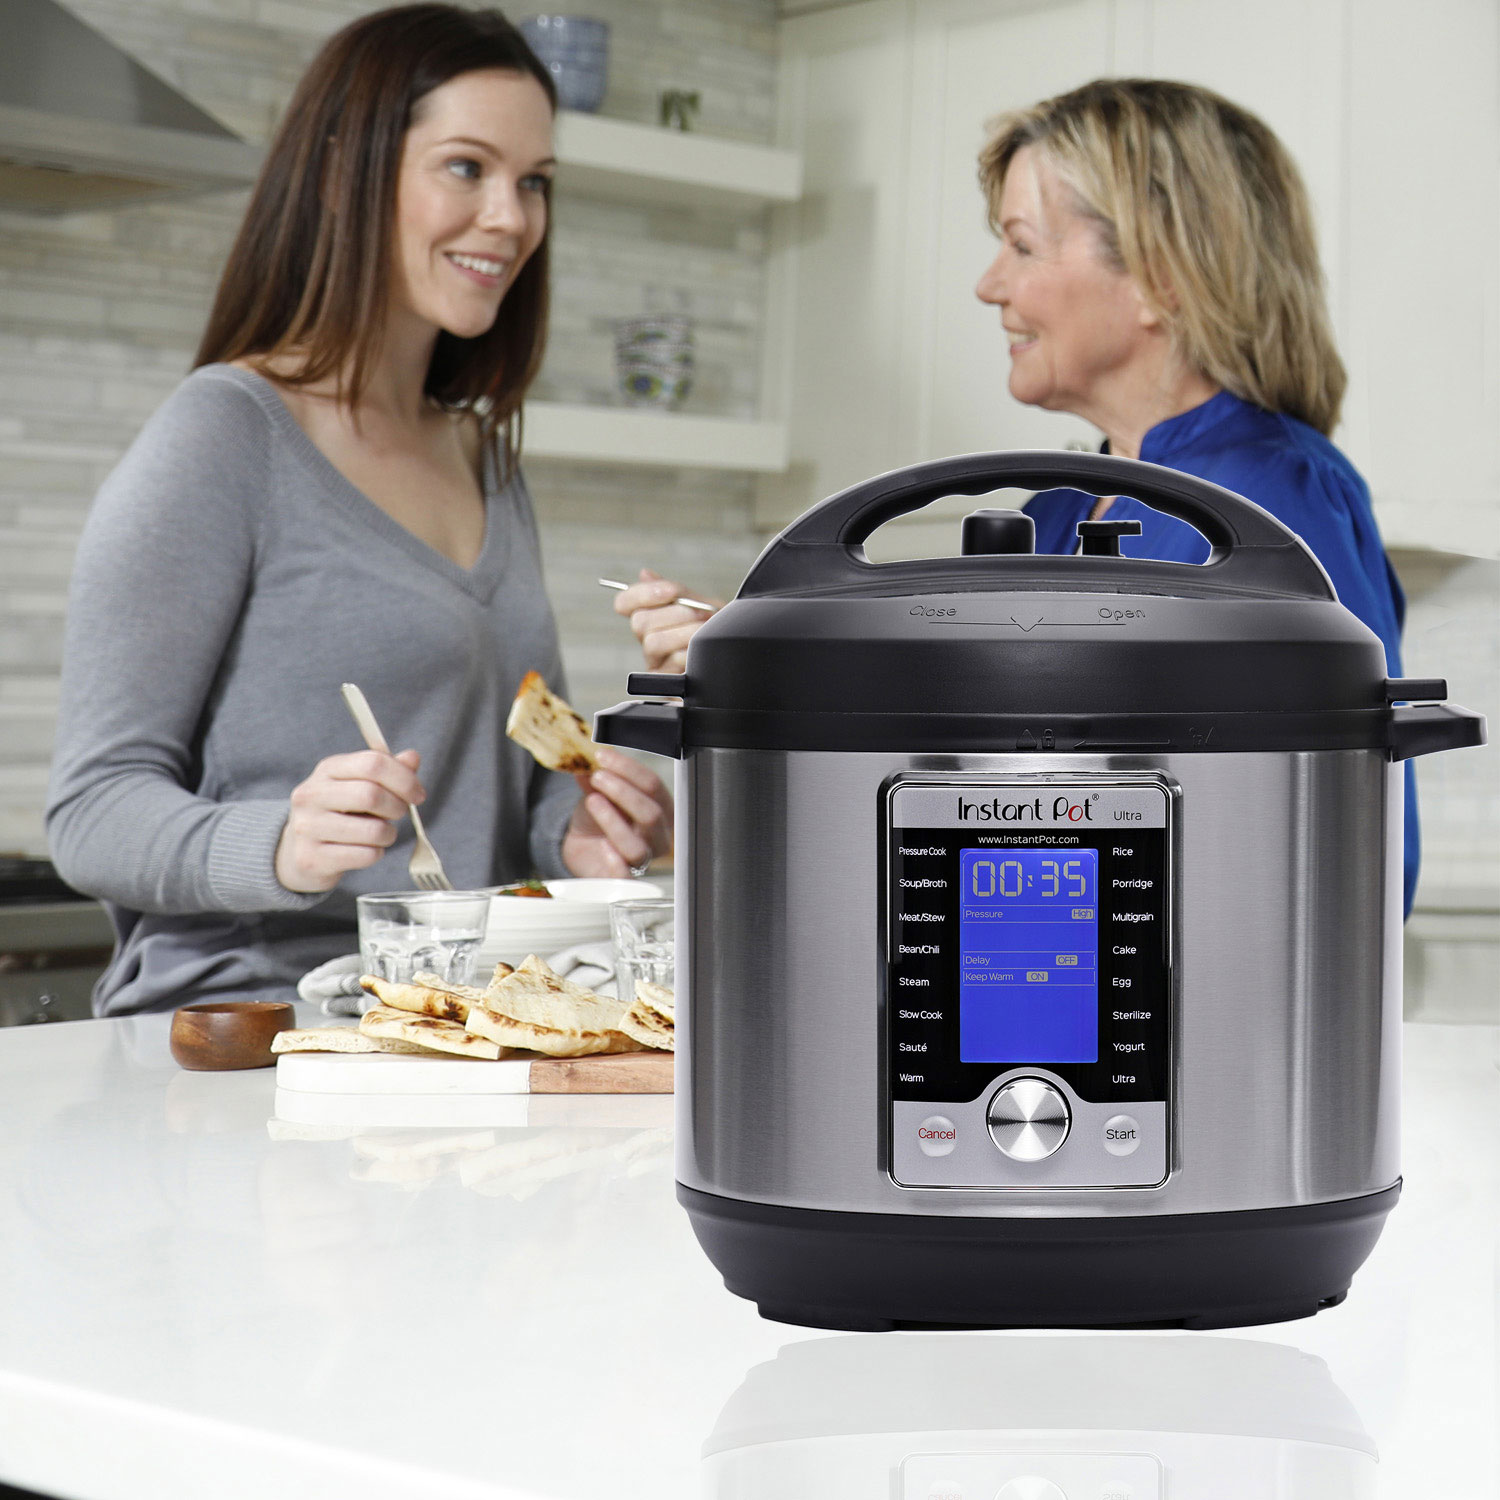 Instant Pot pressure cooker